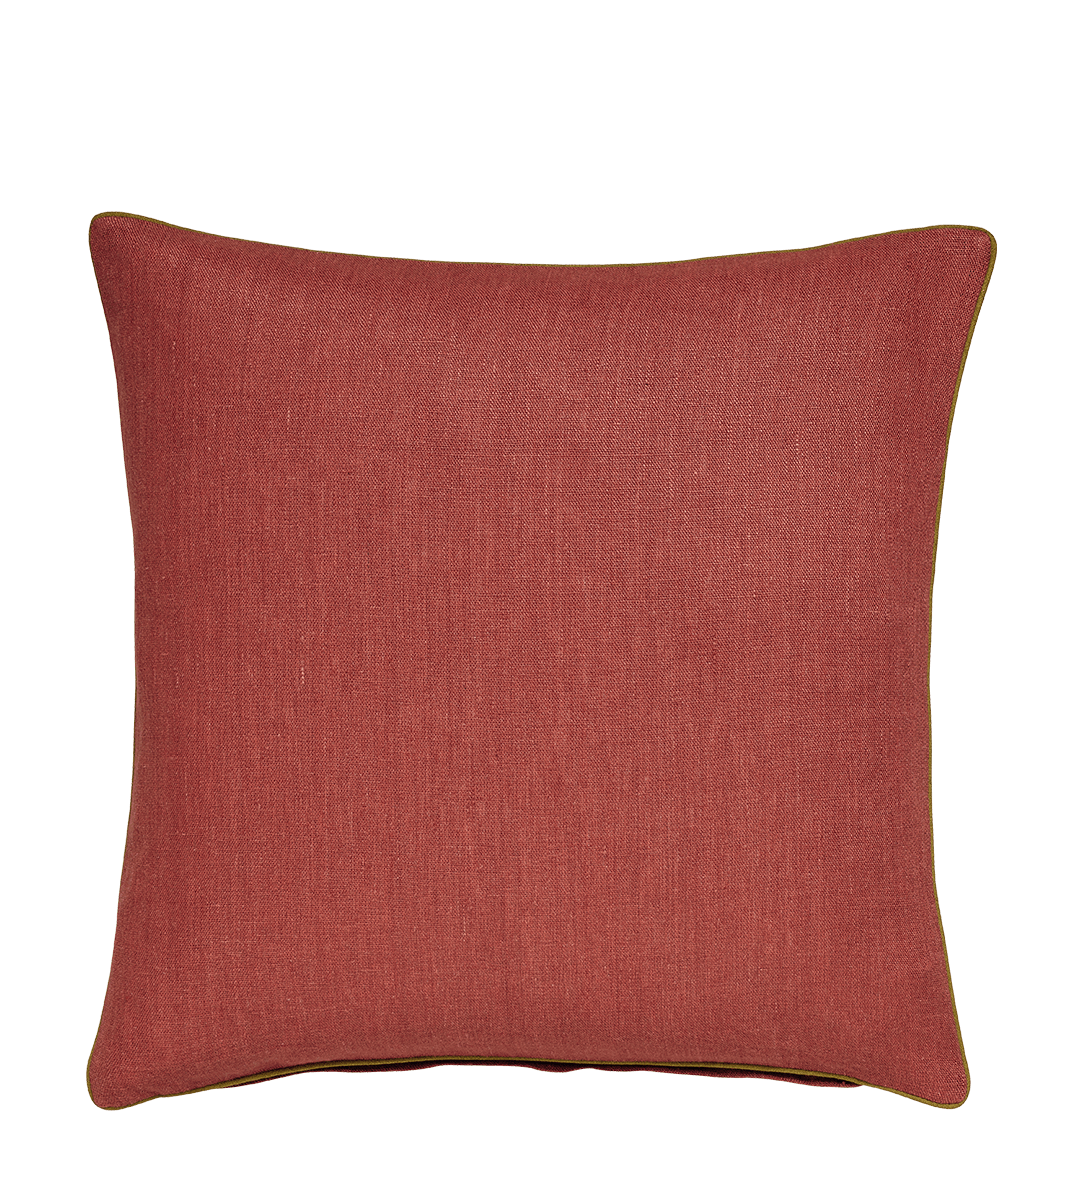 Loose Linen Cushion Cover - Blood orange/ Alchemilla